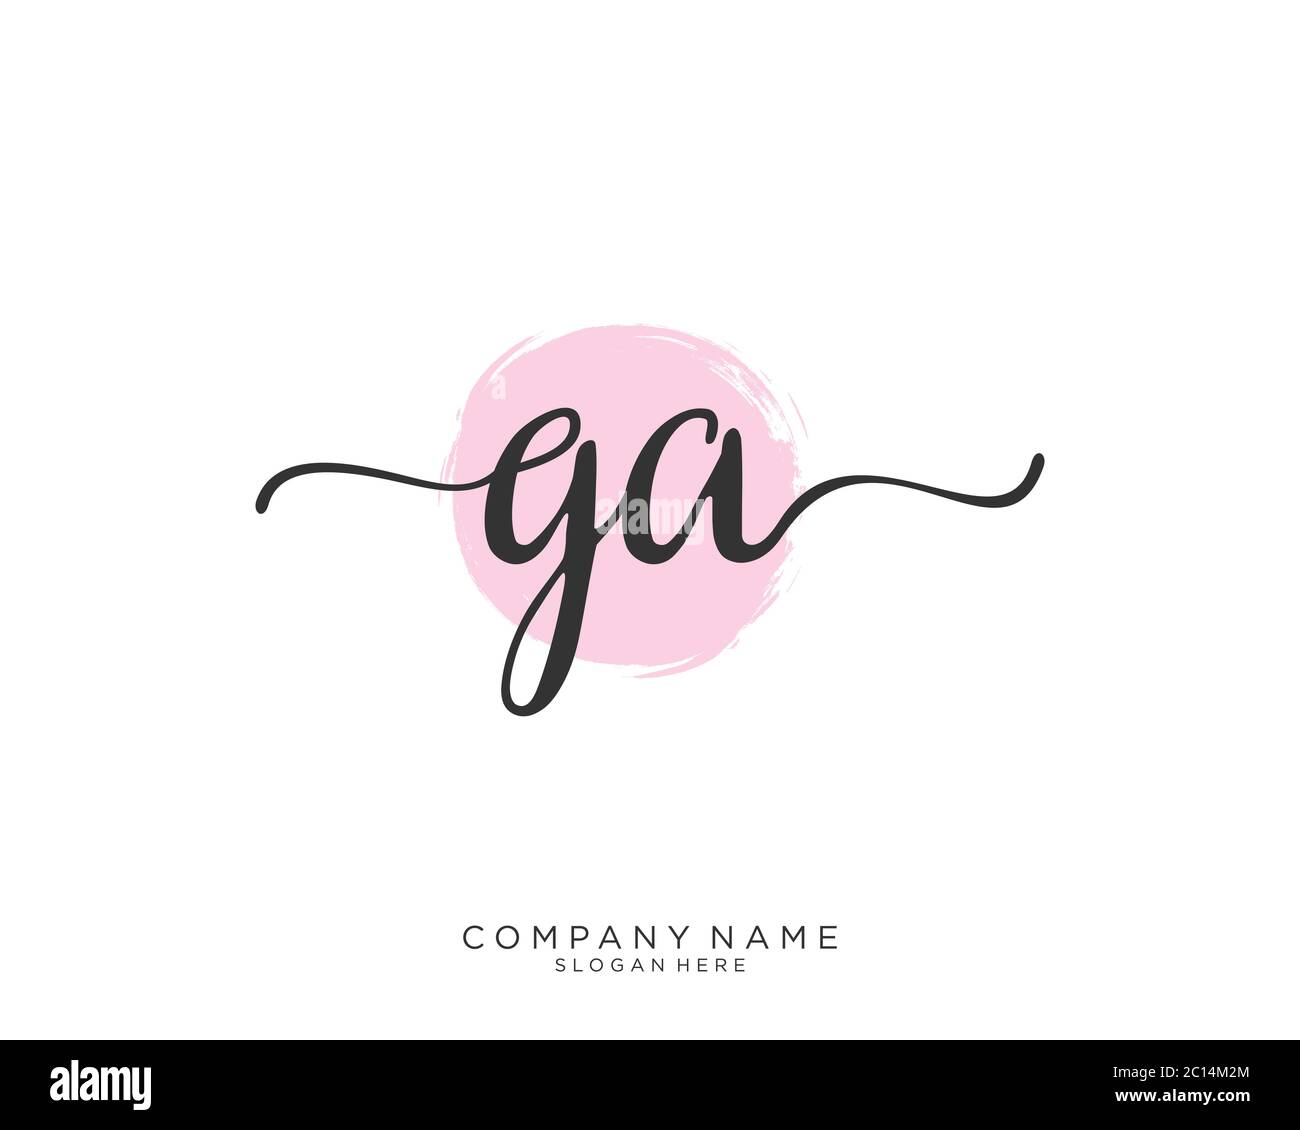 GA Initial handwriting logo vector Stock Vector